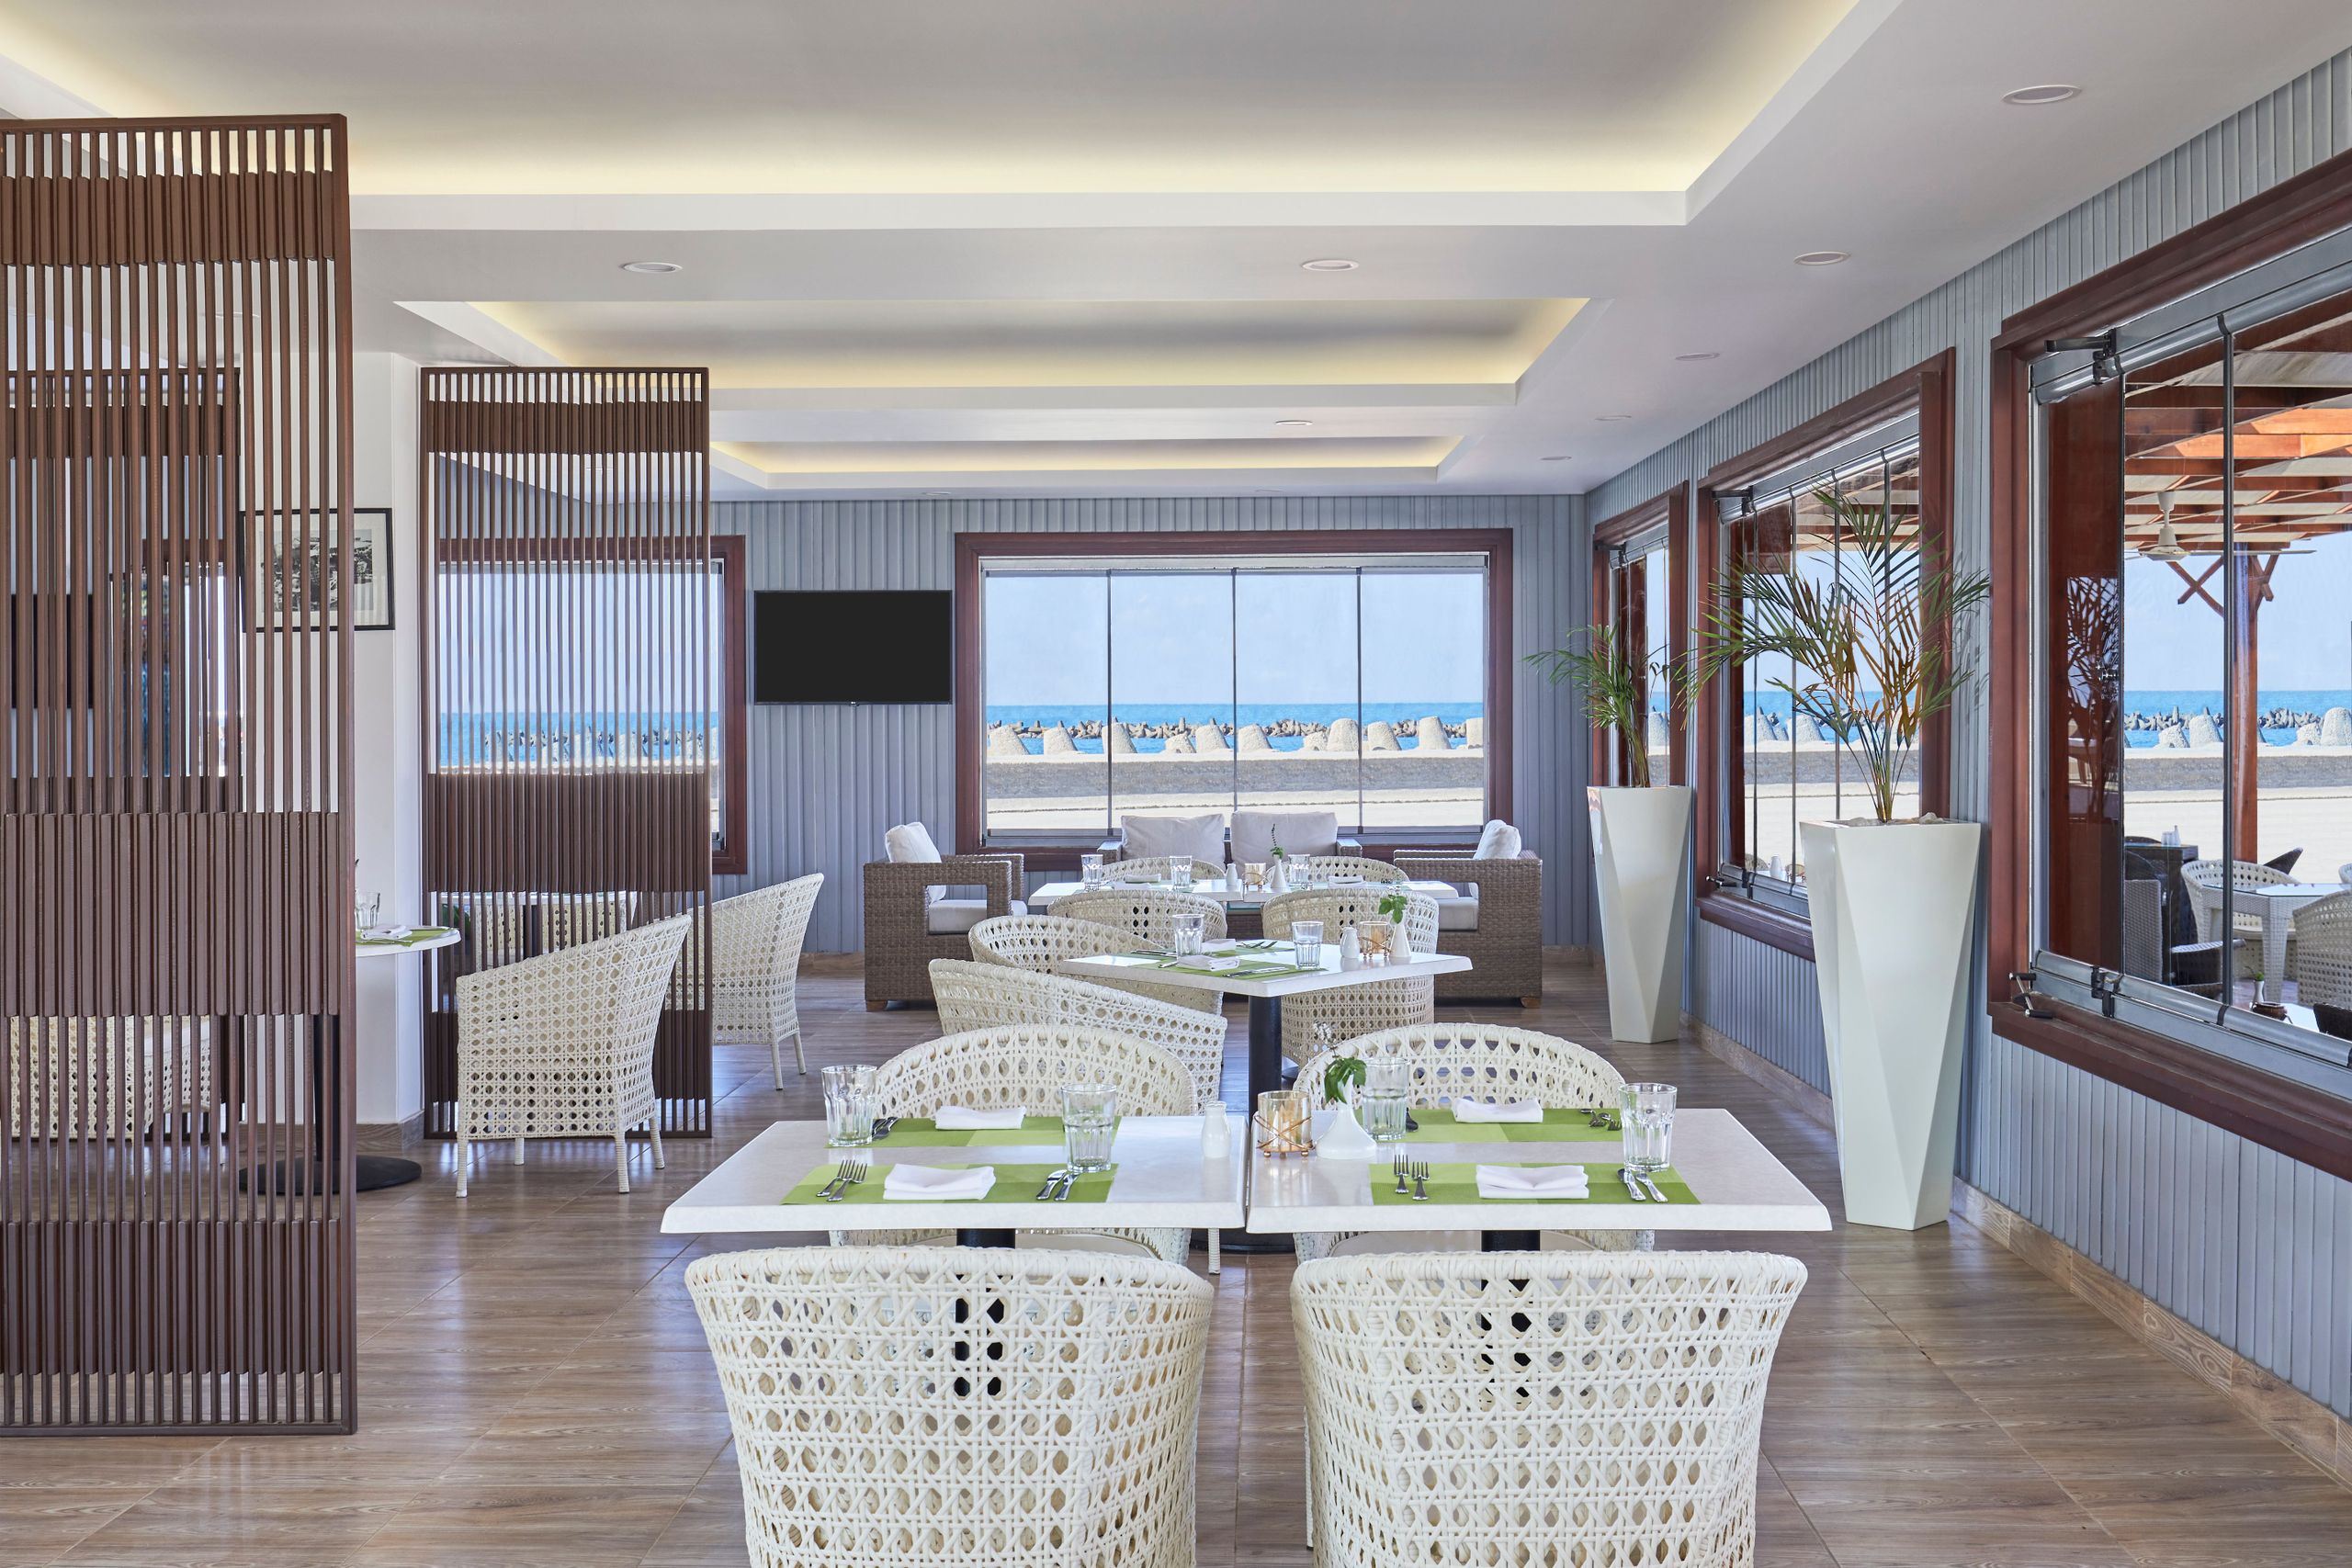 Steigenberger Hotel El Lessan - Ras El Bar - Egitto - Ristorante sulla spiaggia